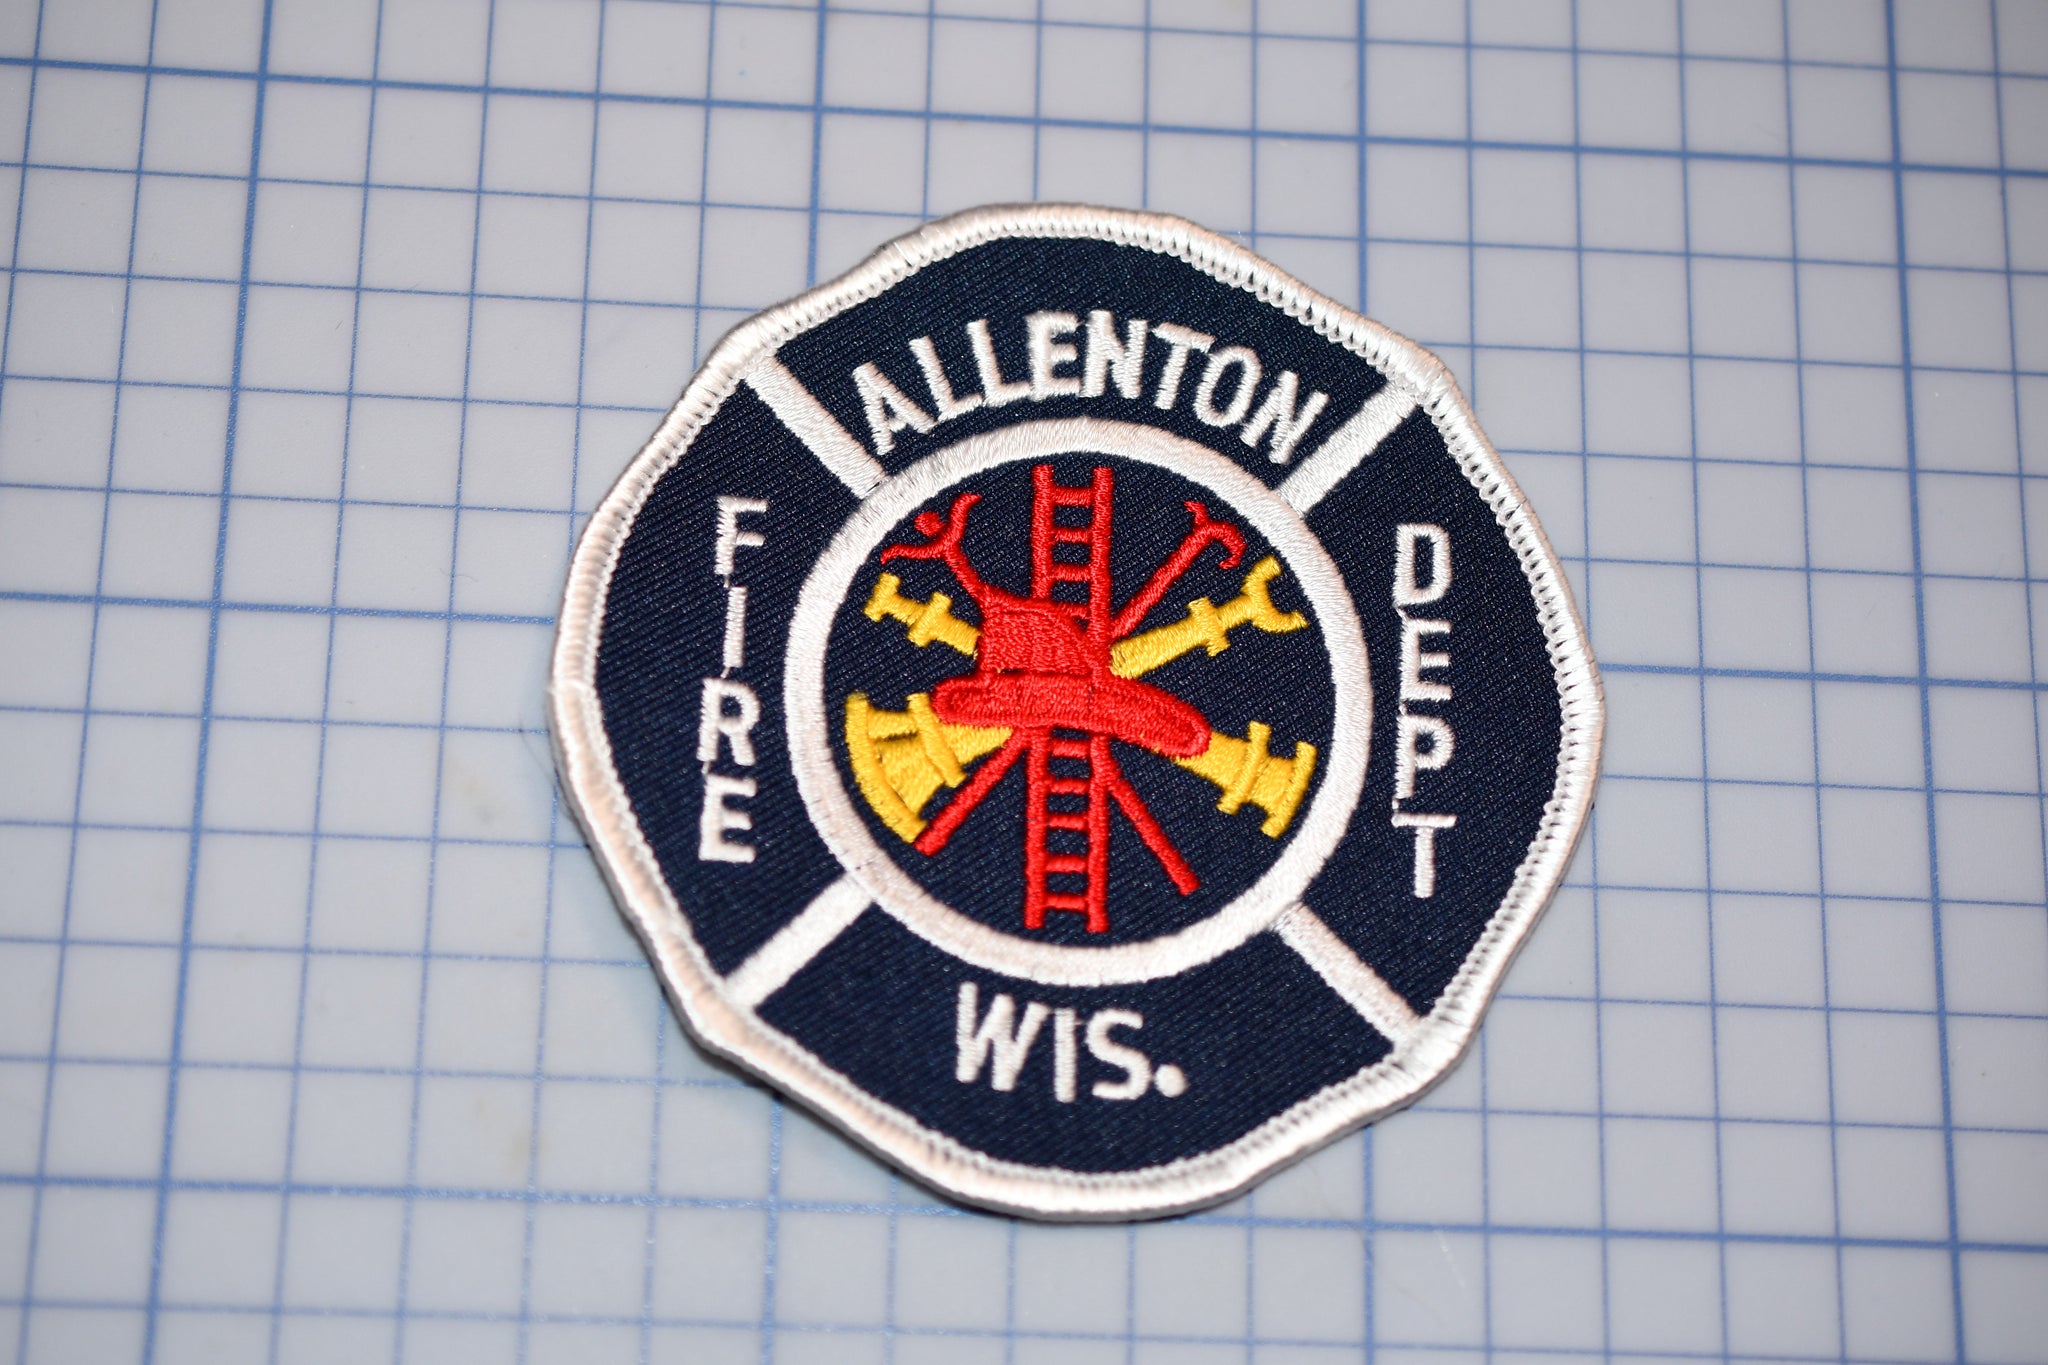 Allenton Wisconsin Fire Department Patch (B29-346)